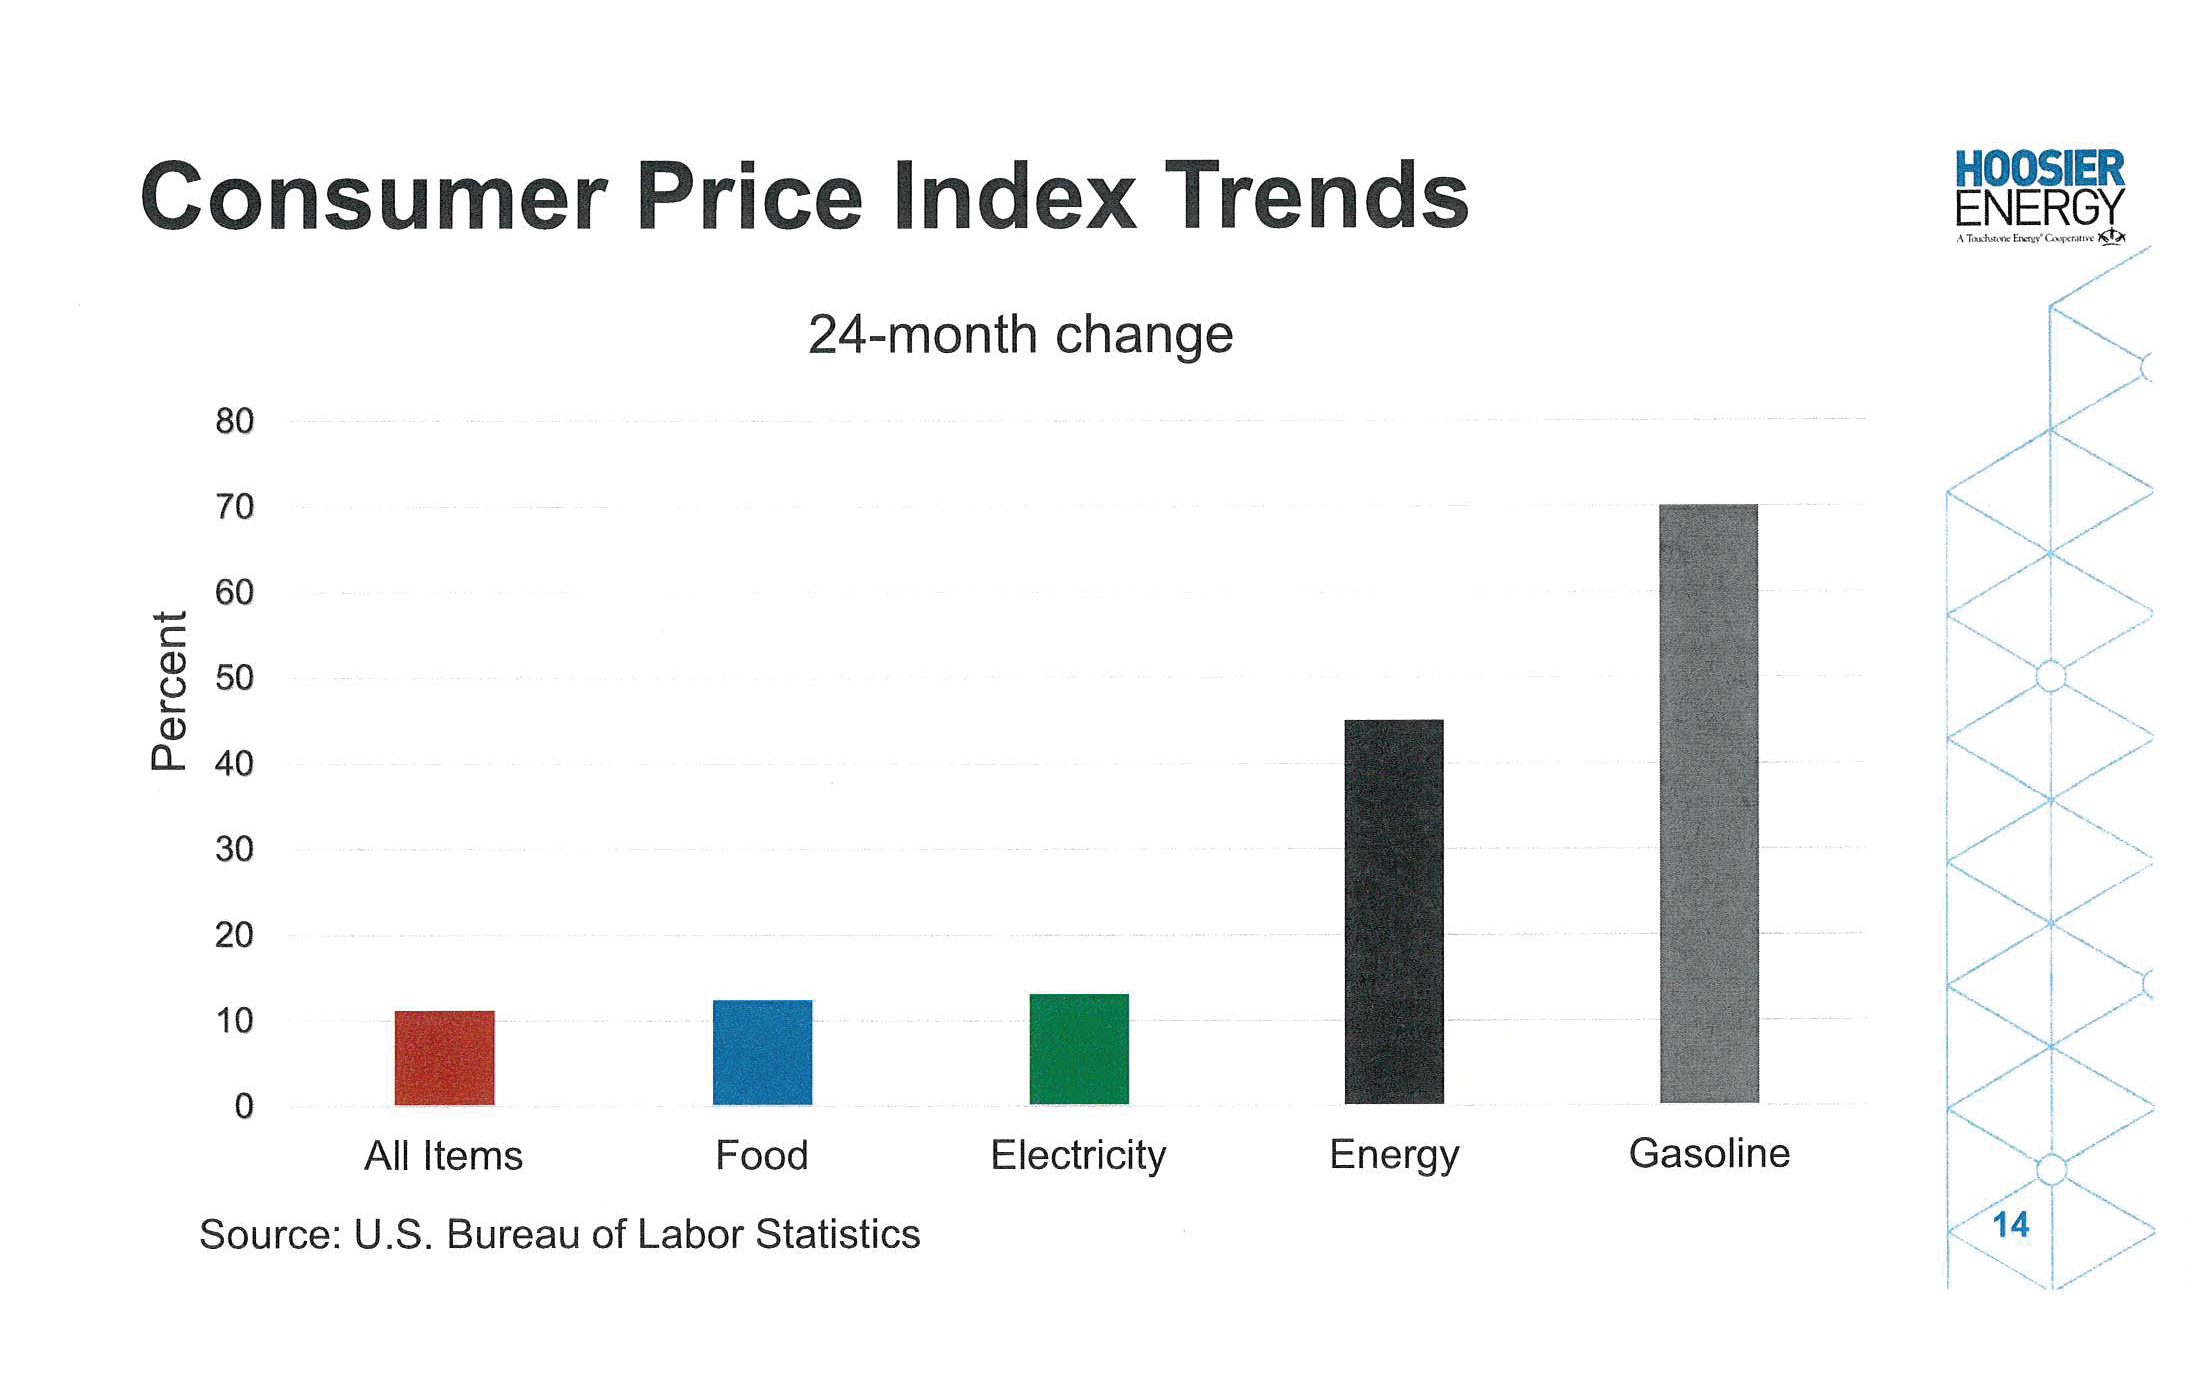 Hoosier Consumer Price Index Trends